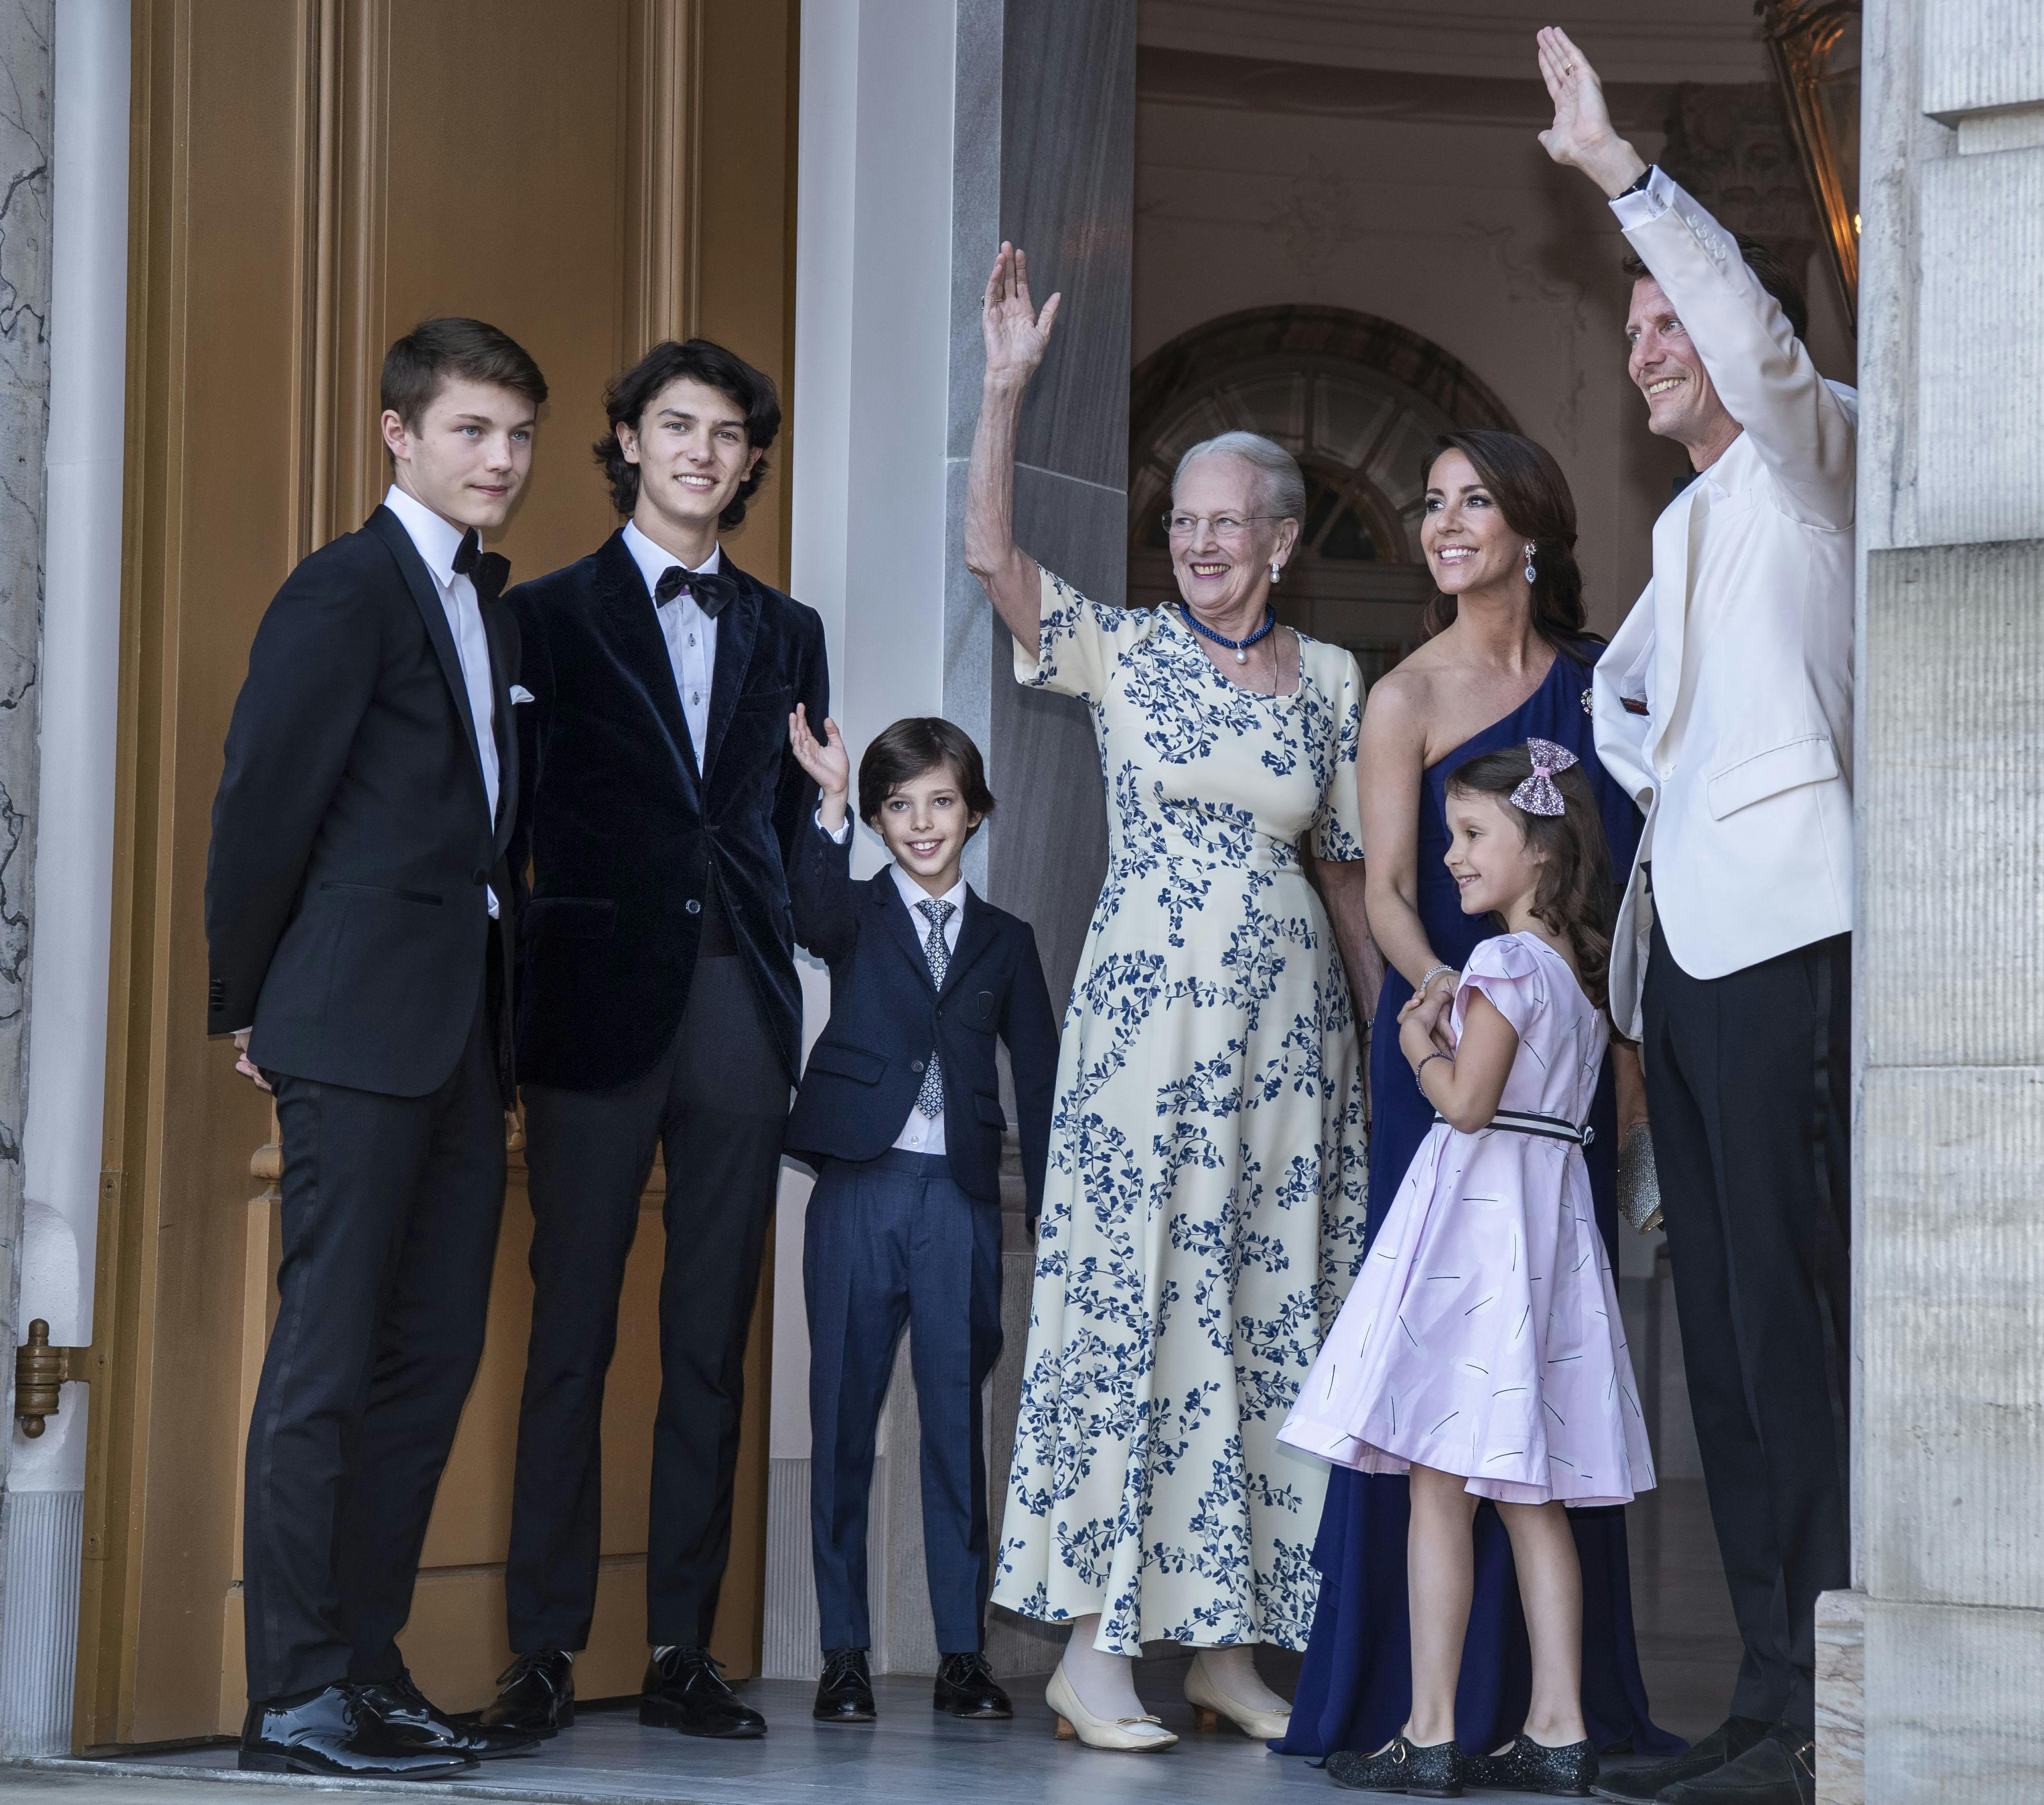 Prins Felix, prins Nikolai, prins Henrik, dronning Margrethe, prinsesse Marie, prinsesse Athena og prins Joachim